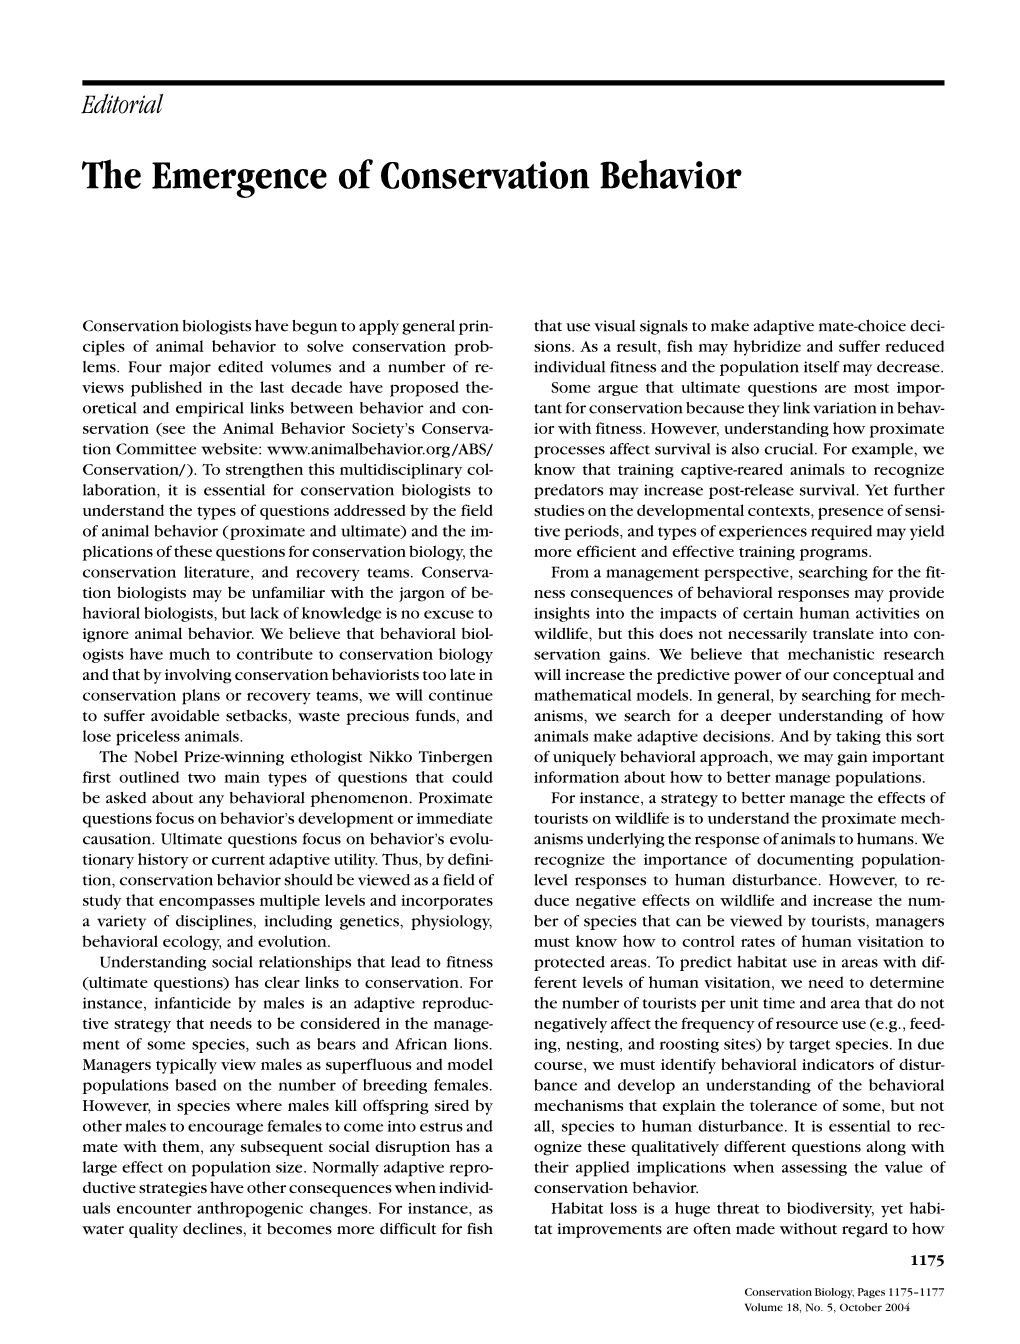 The Emergence of Conservation Behavior